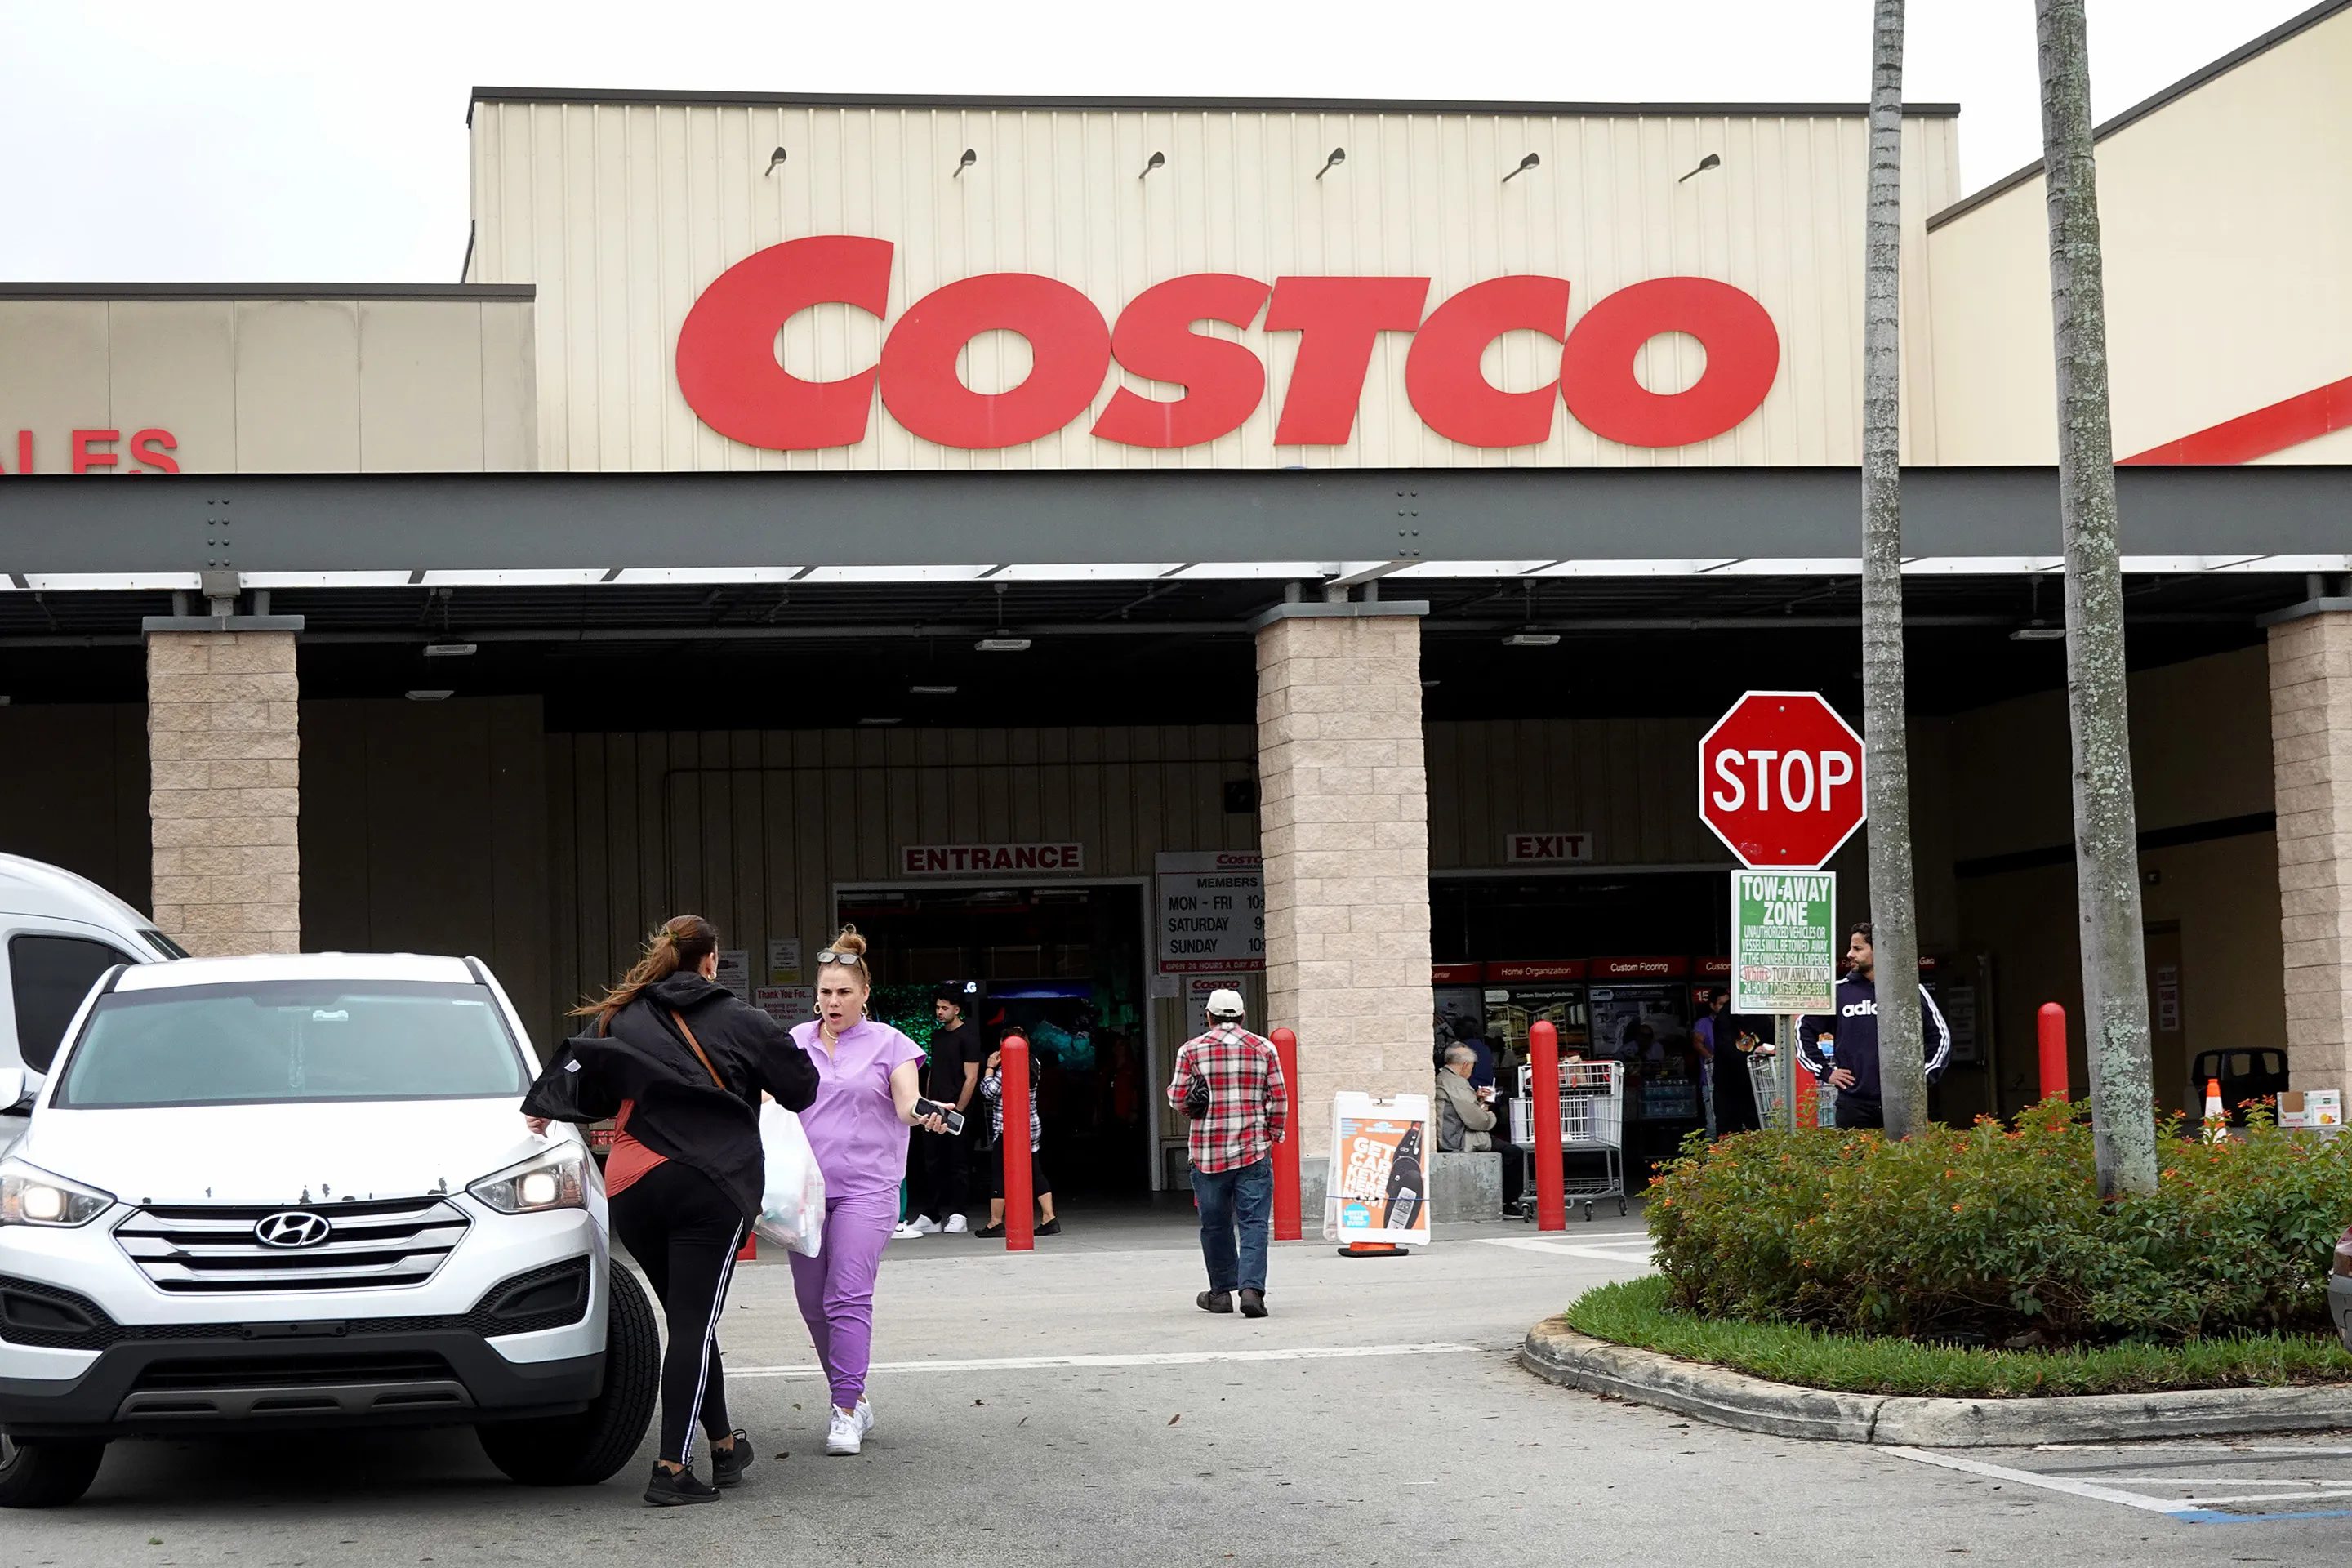 North Canton, Ohio finally got a Costco. Had to go see all the good💓